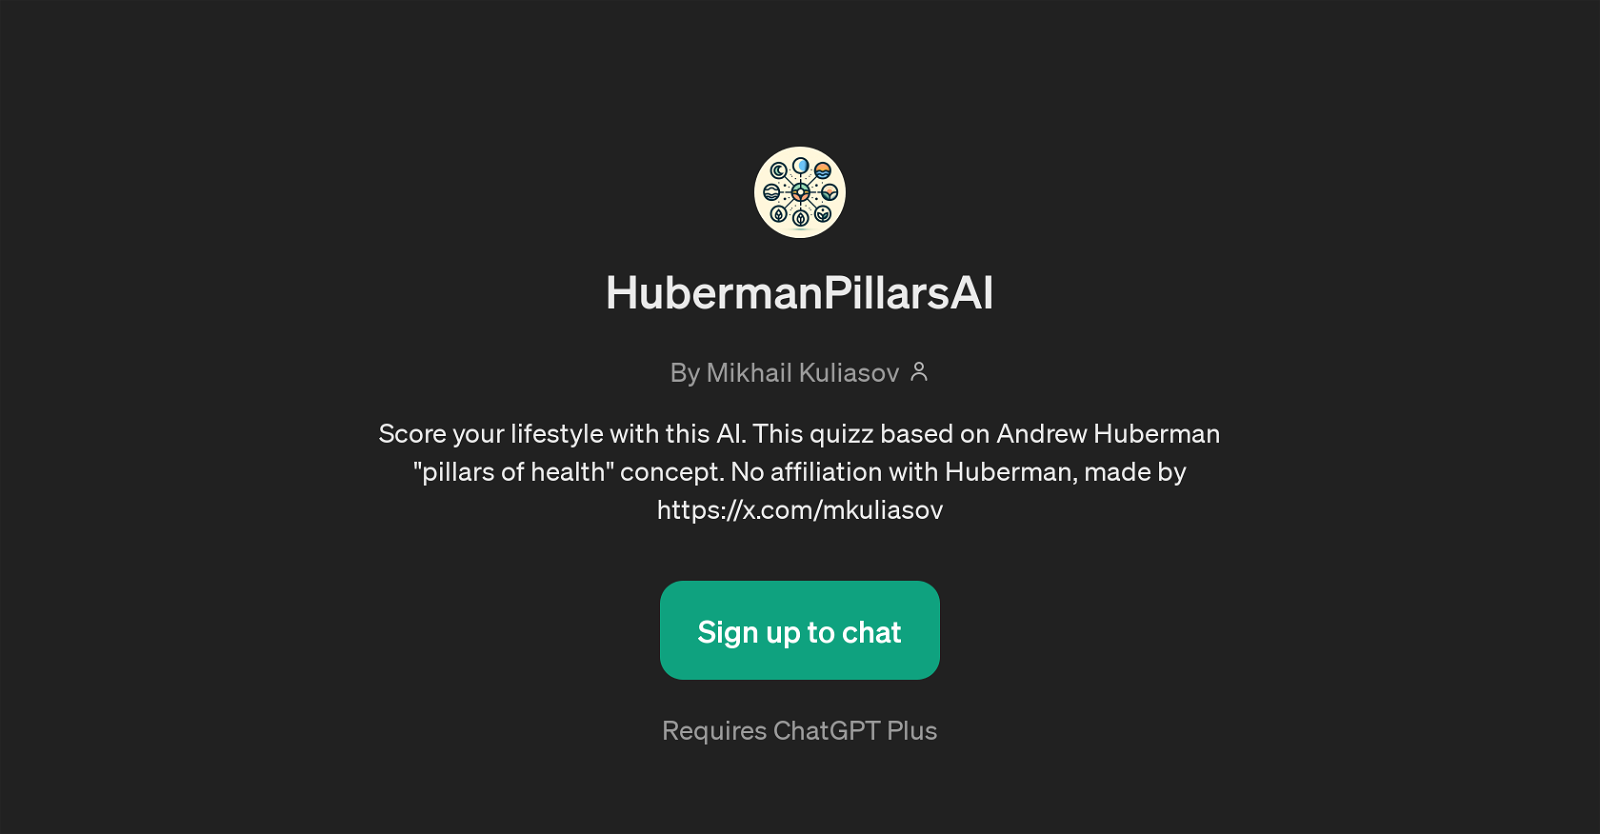 HubermanPillarsAI website